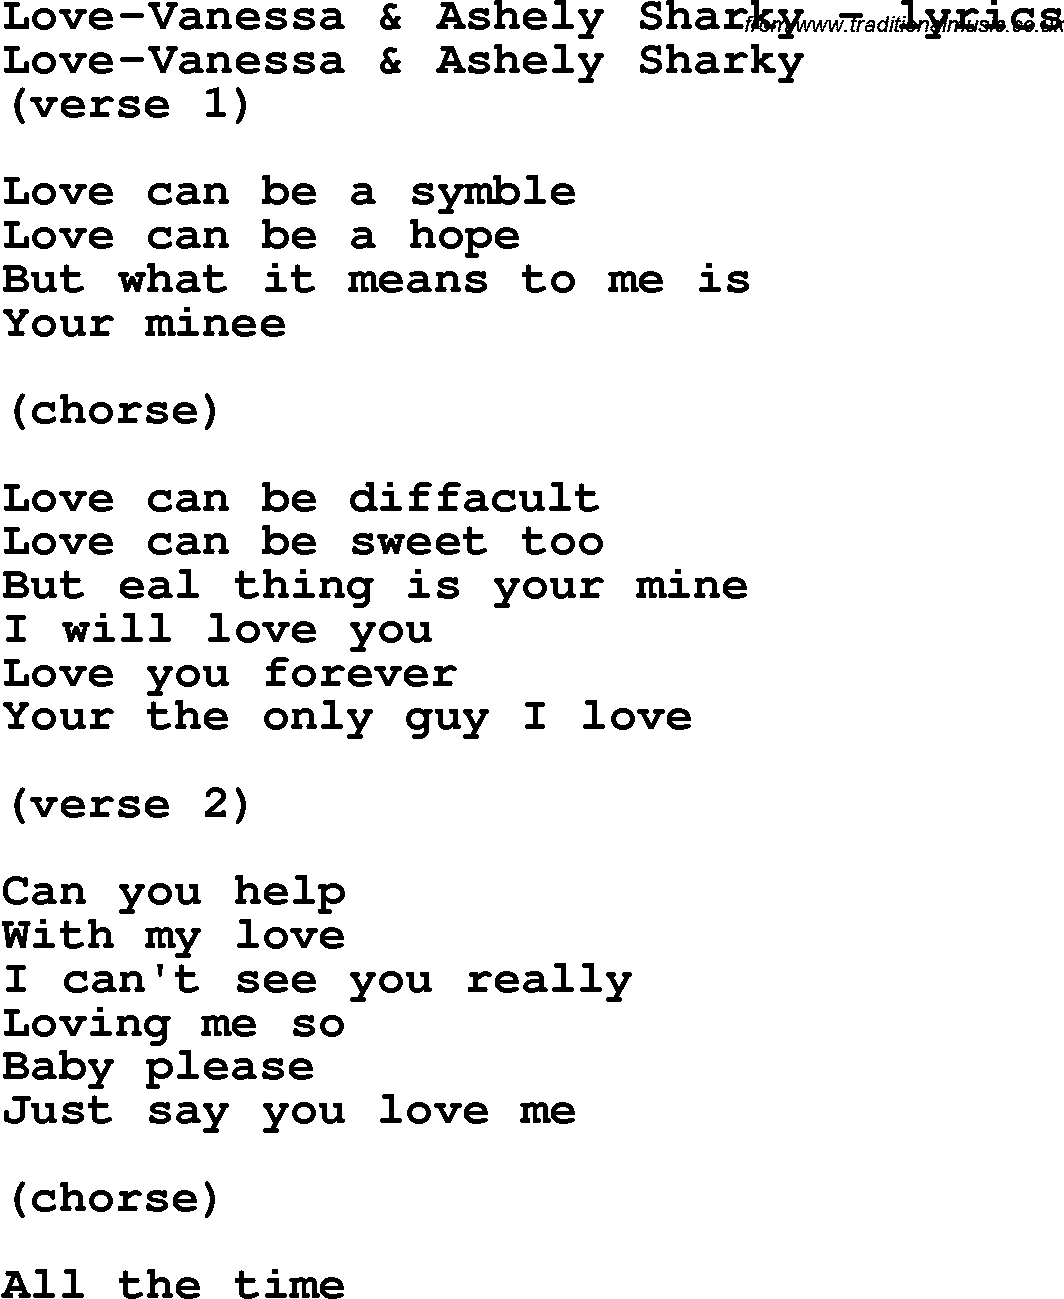 Love Song Lyrics for: Love-Vanessa & Ashely Sharky